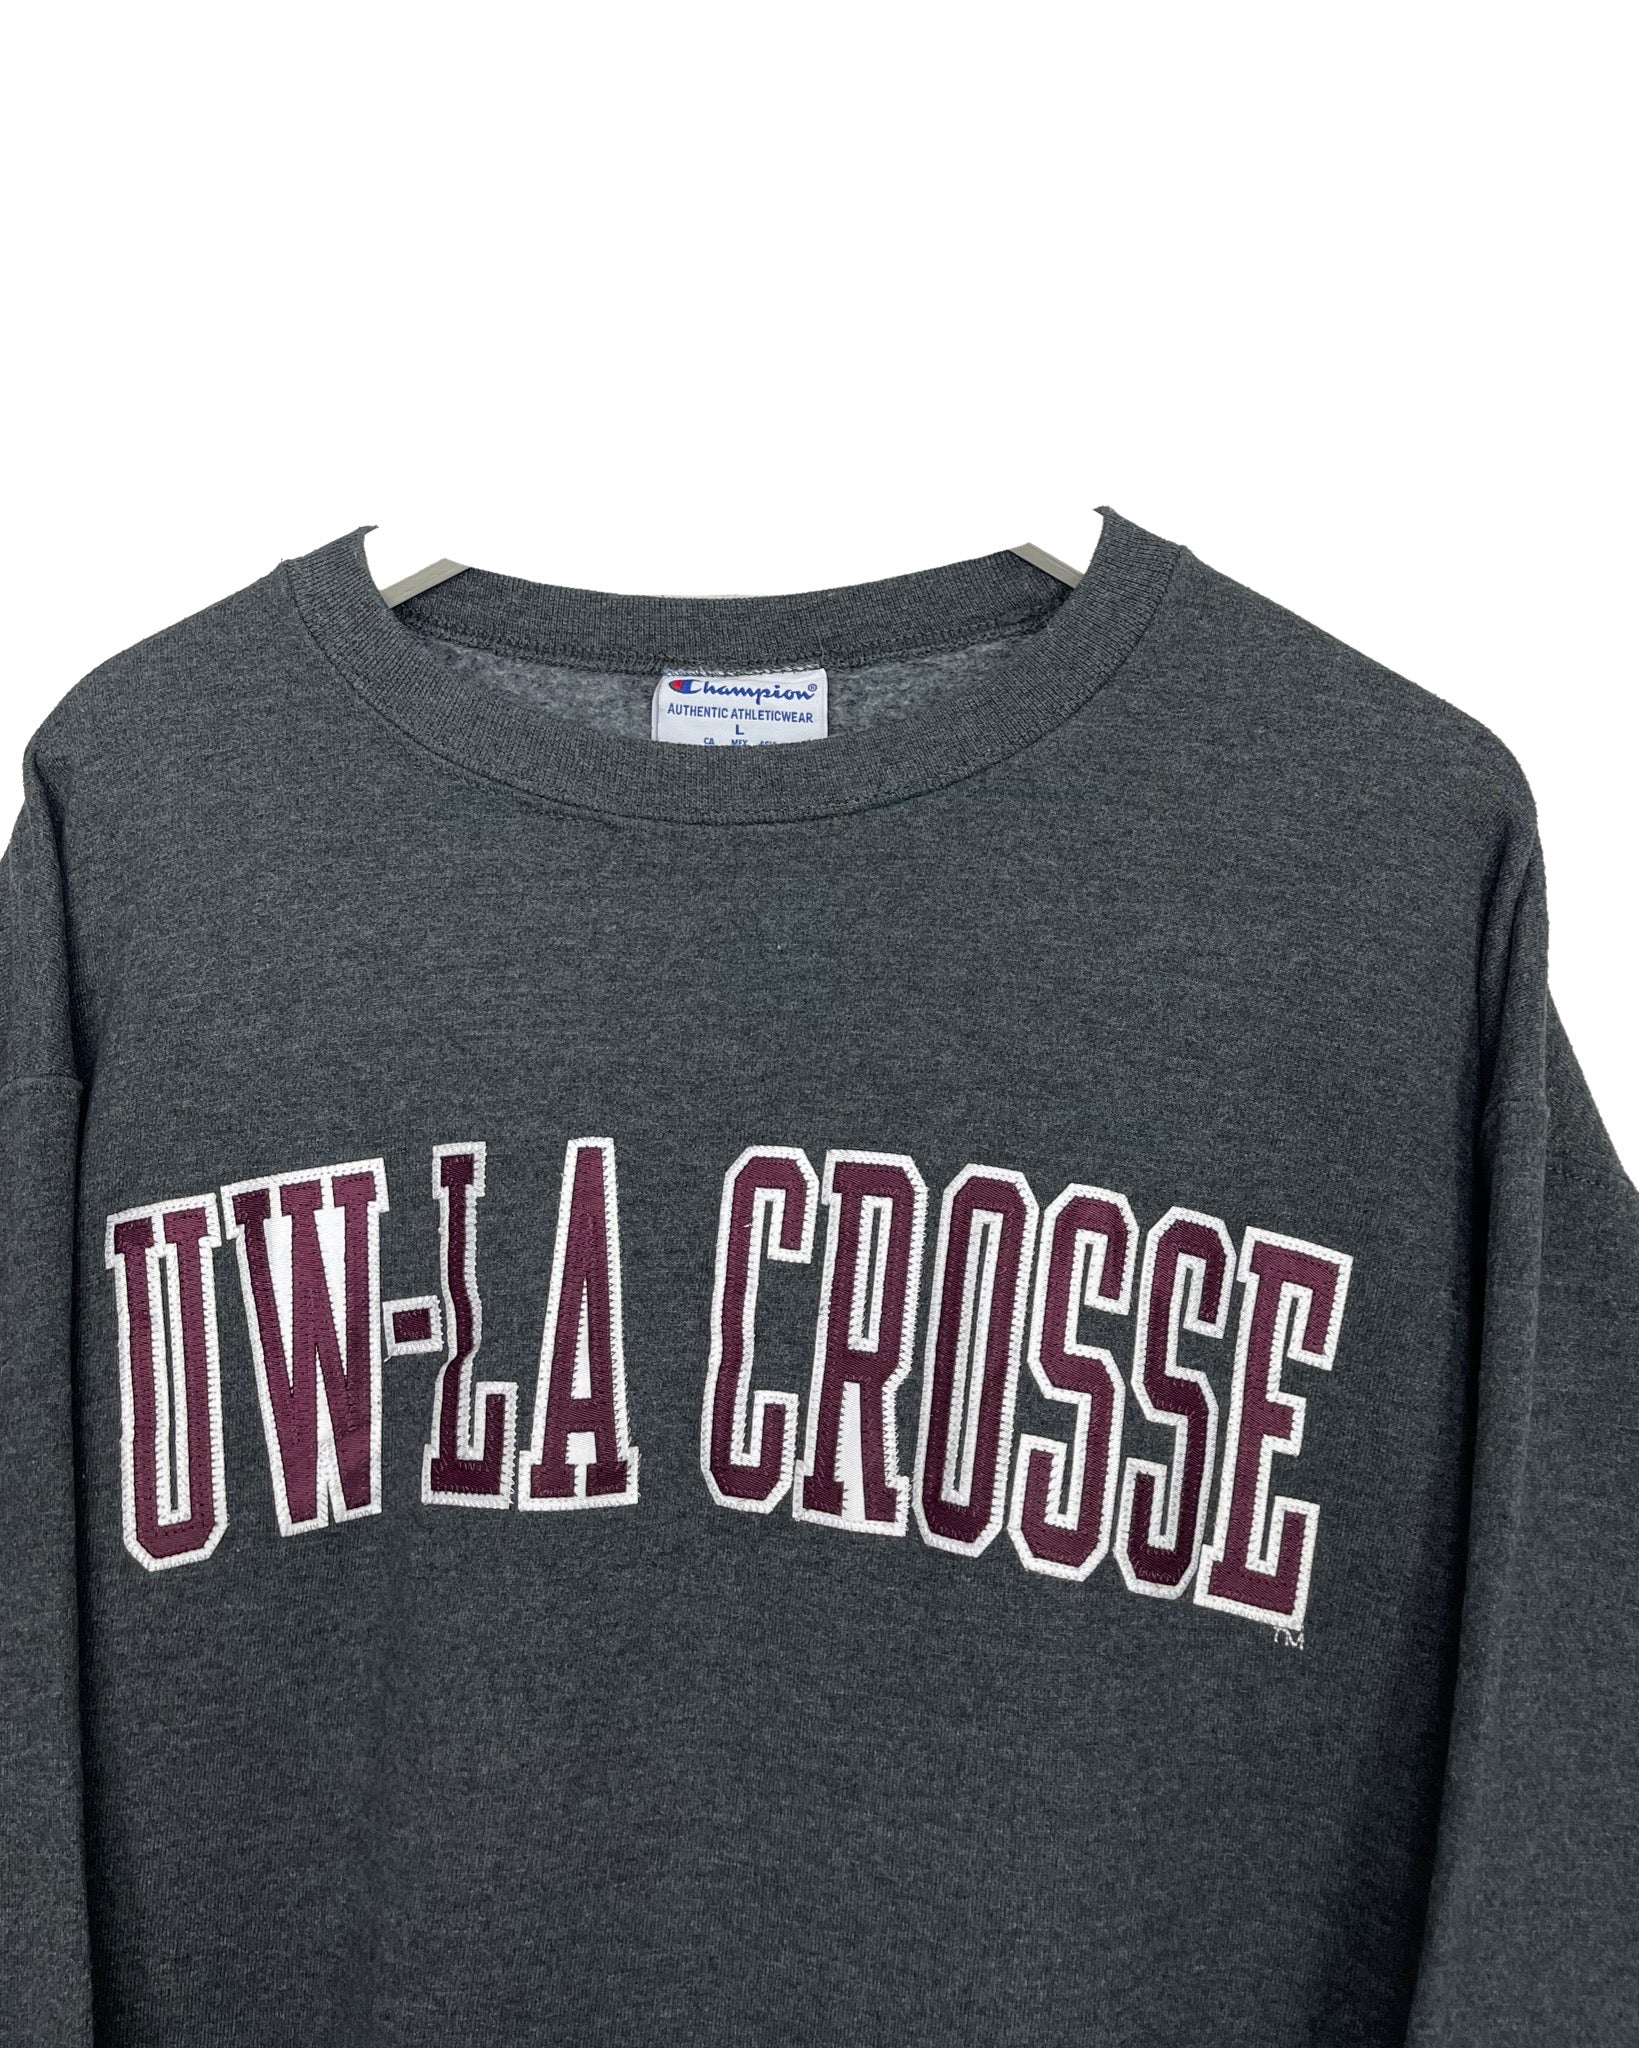  Sweatshirt Champion Sweat - University of Wisconsin - L - PLOMOSTORE